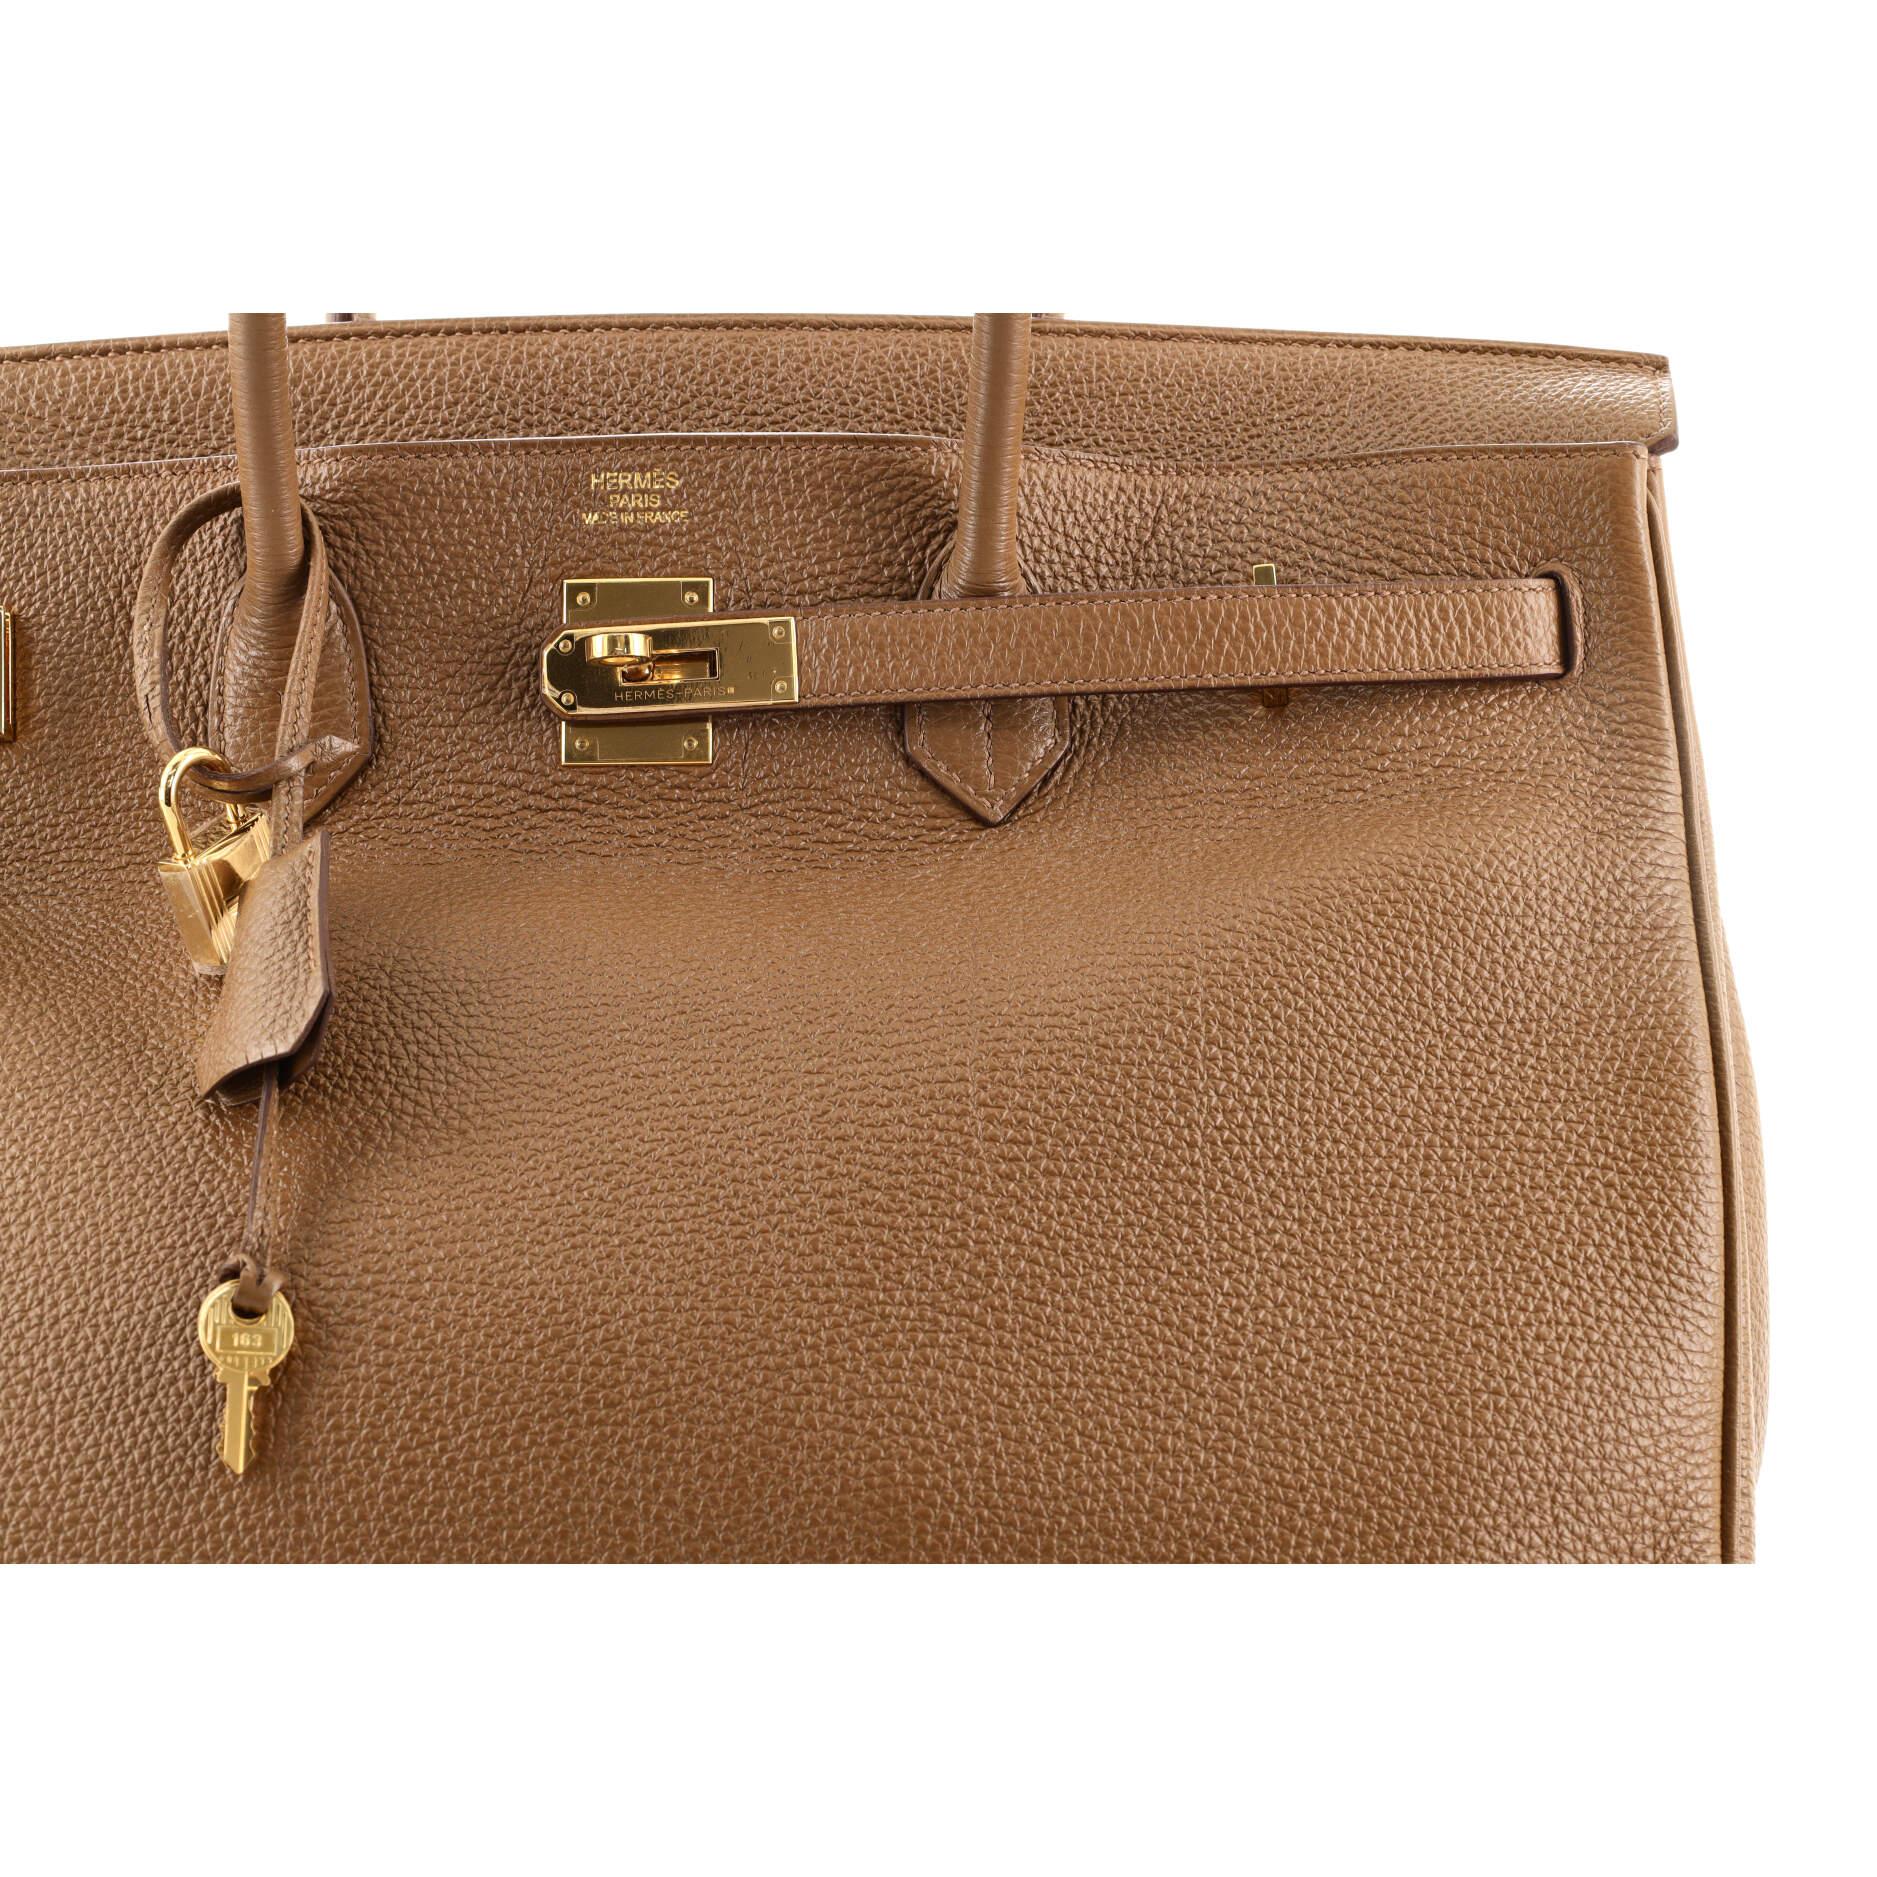 Hermes Birkin Handbag Biscuit Togo with Gold Hardware 40 2